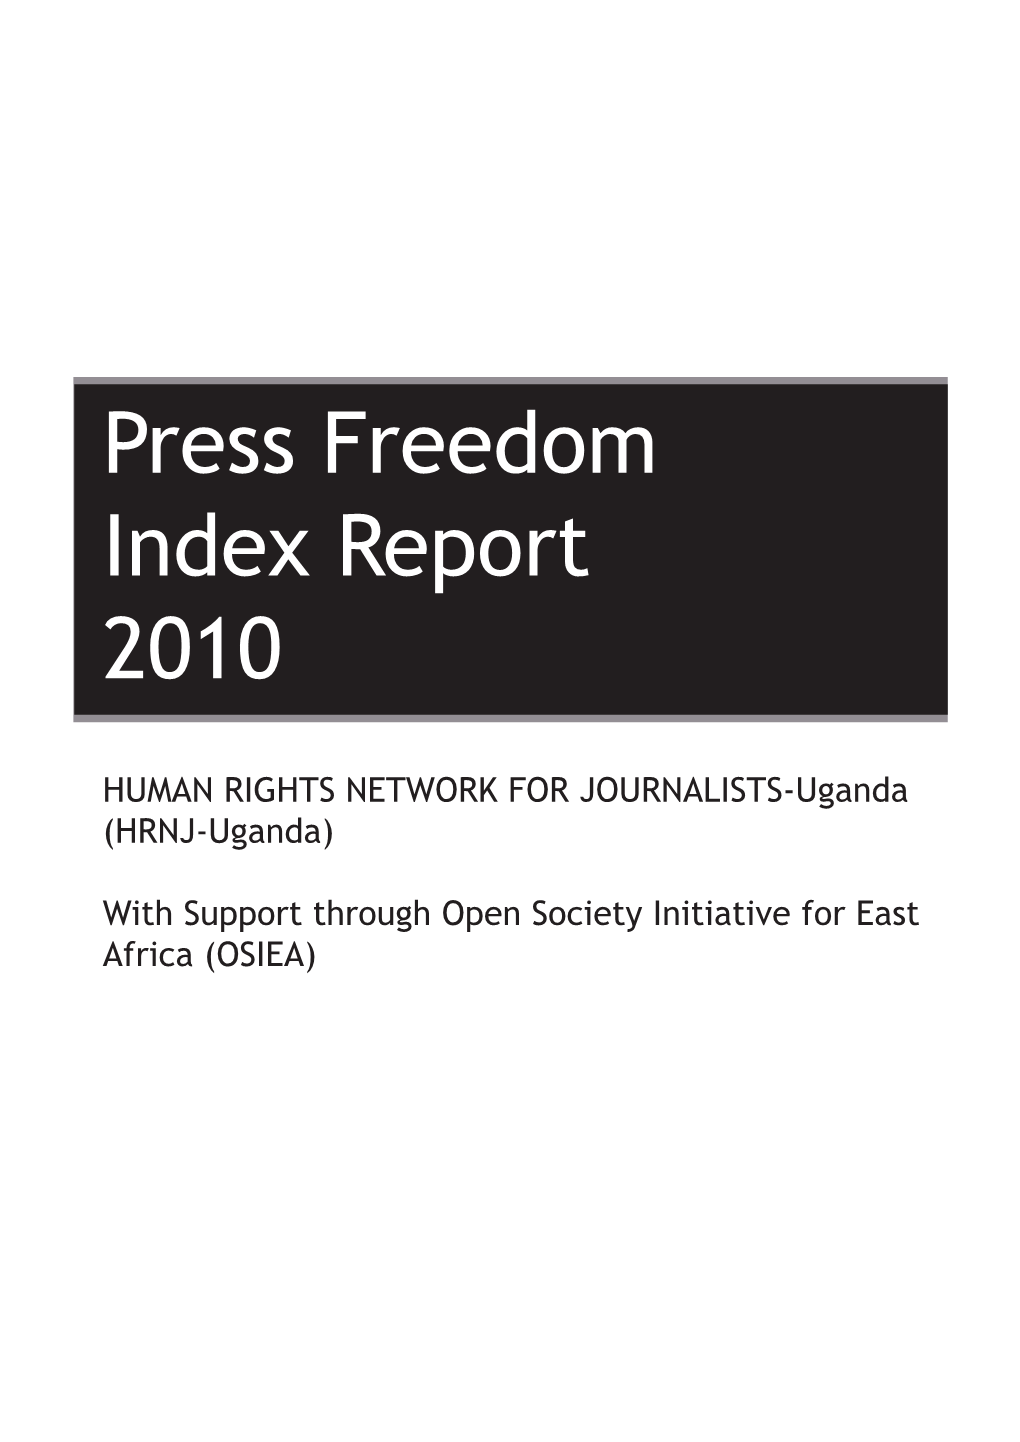 Press Freedom Index Report 2010